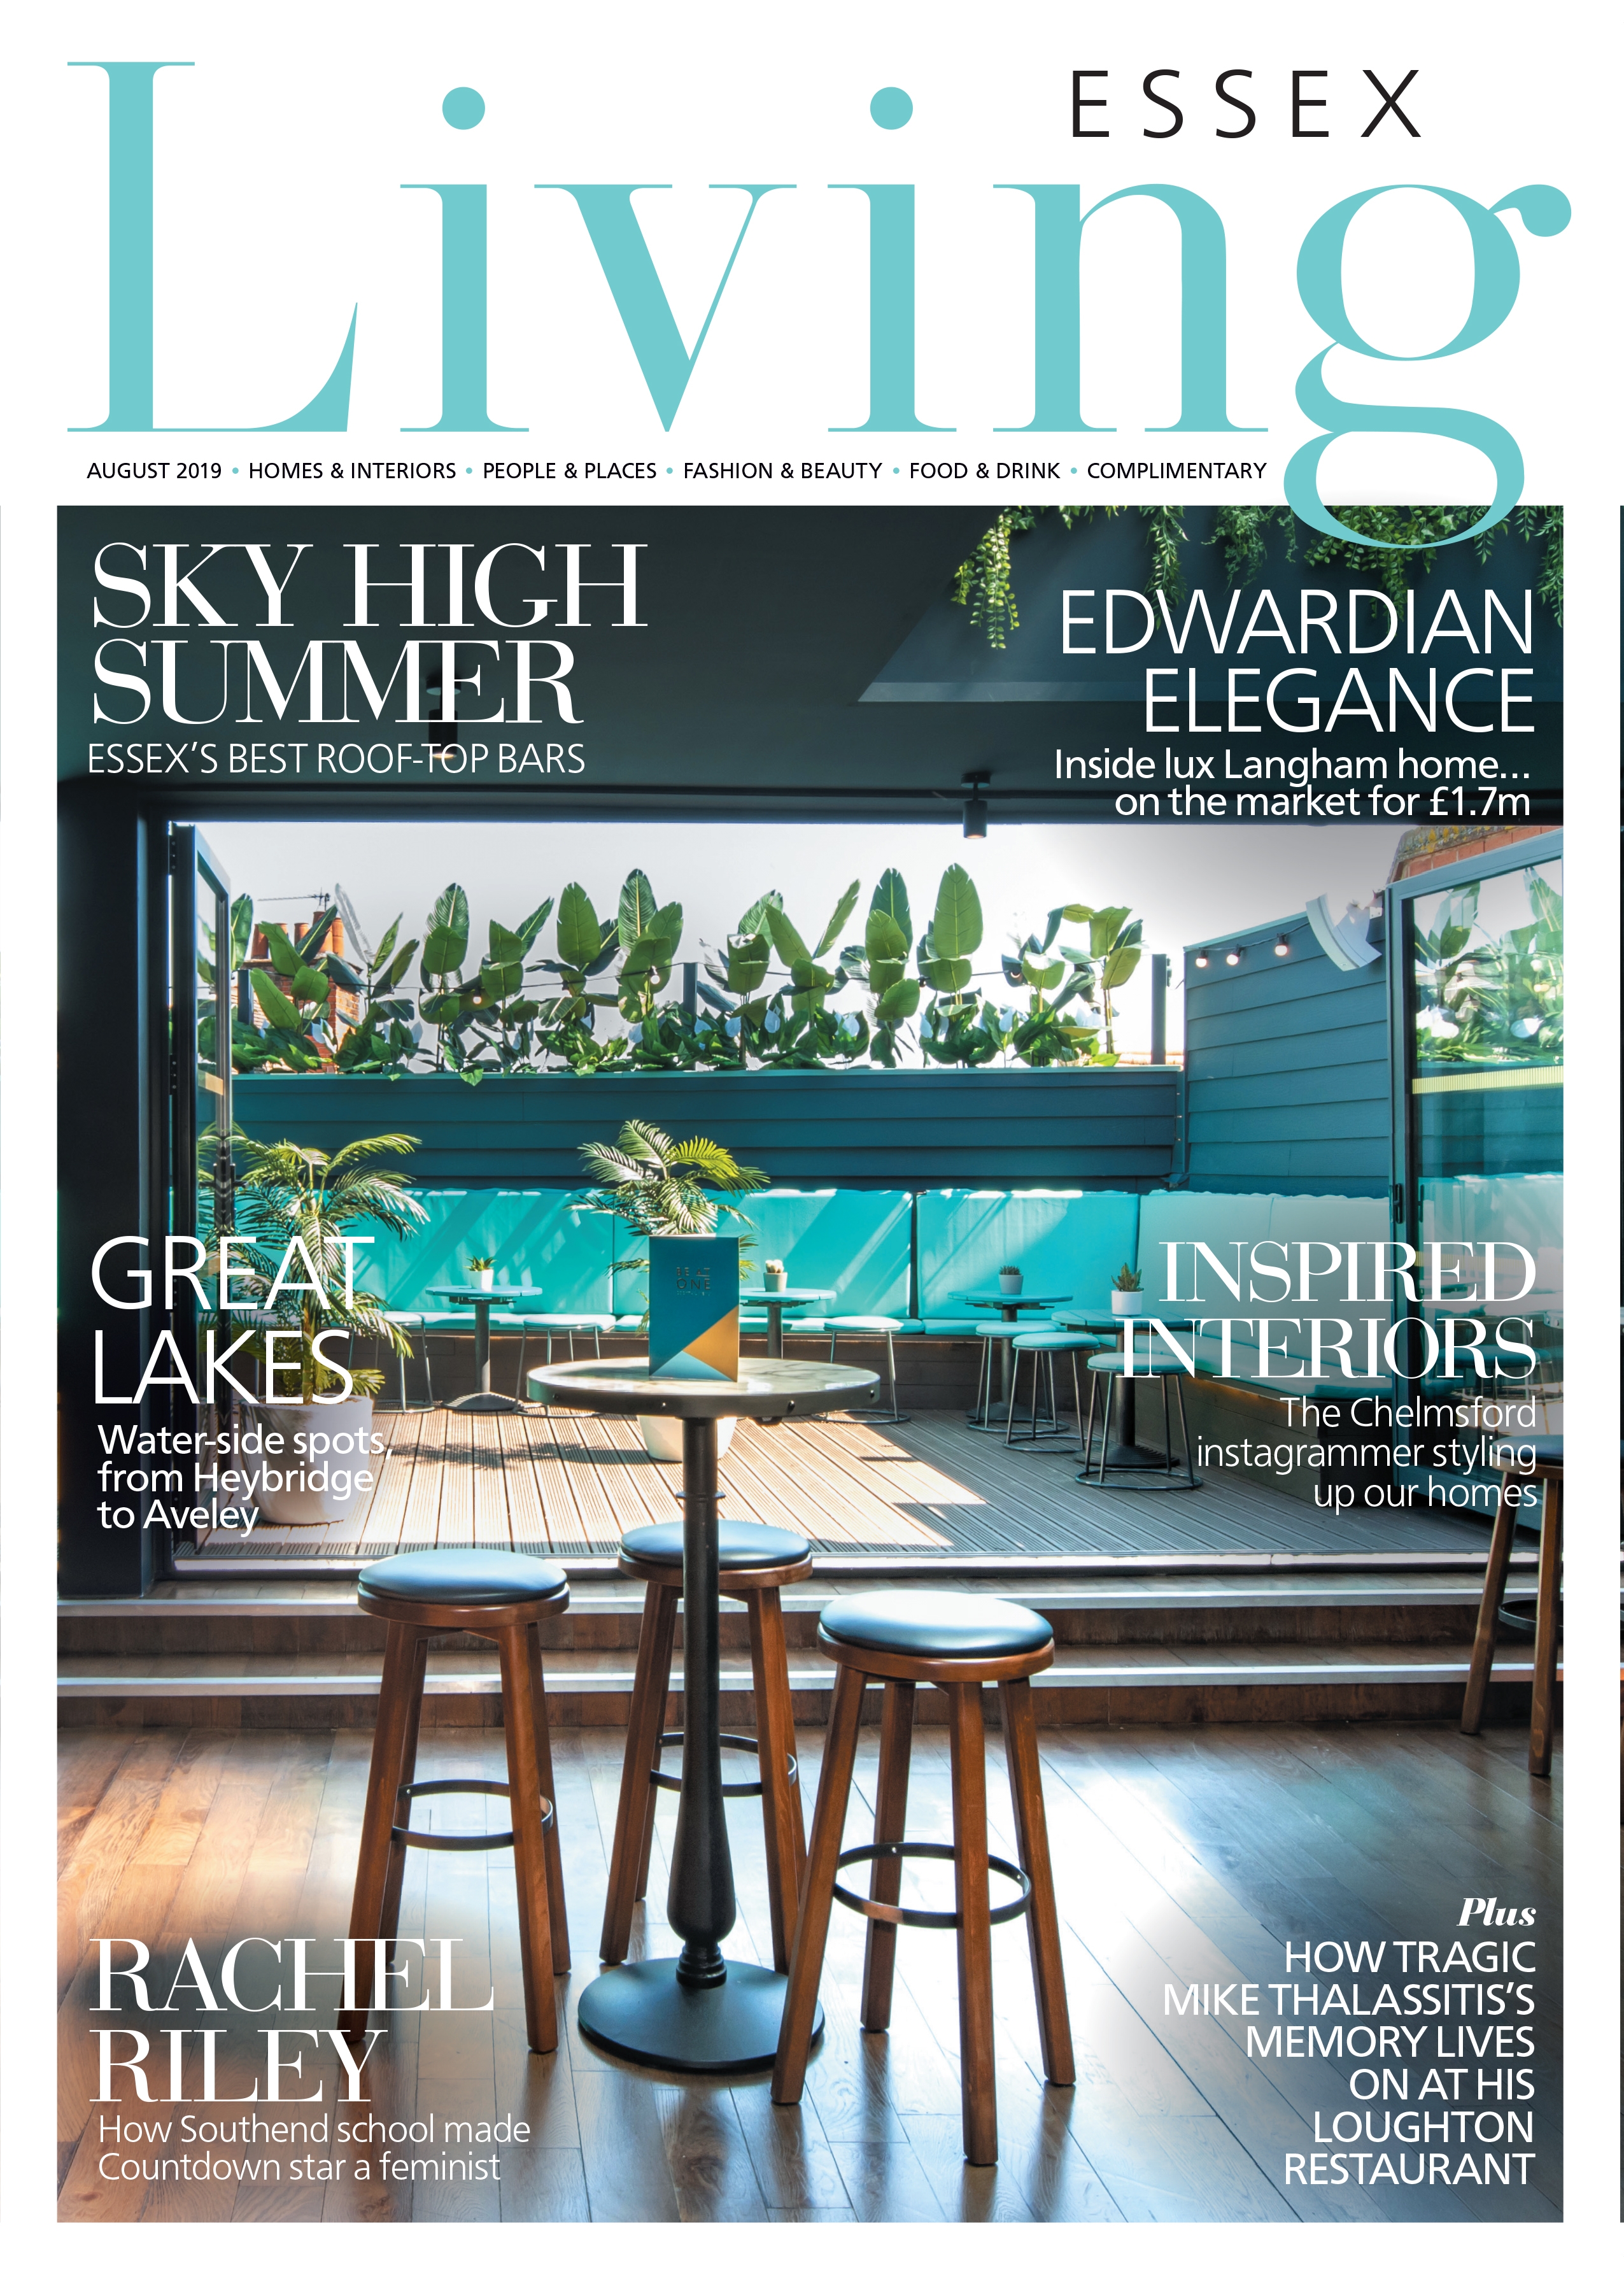 Essex Living | Living Magazine